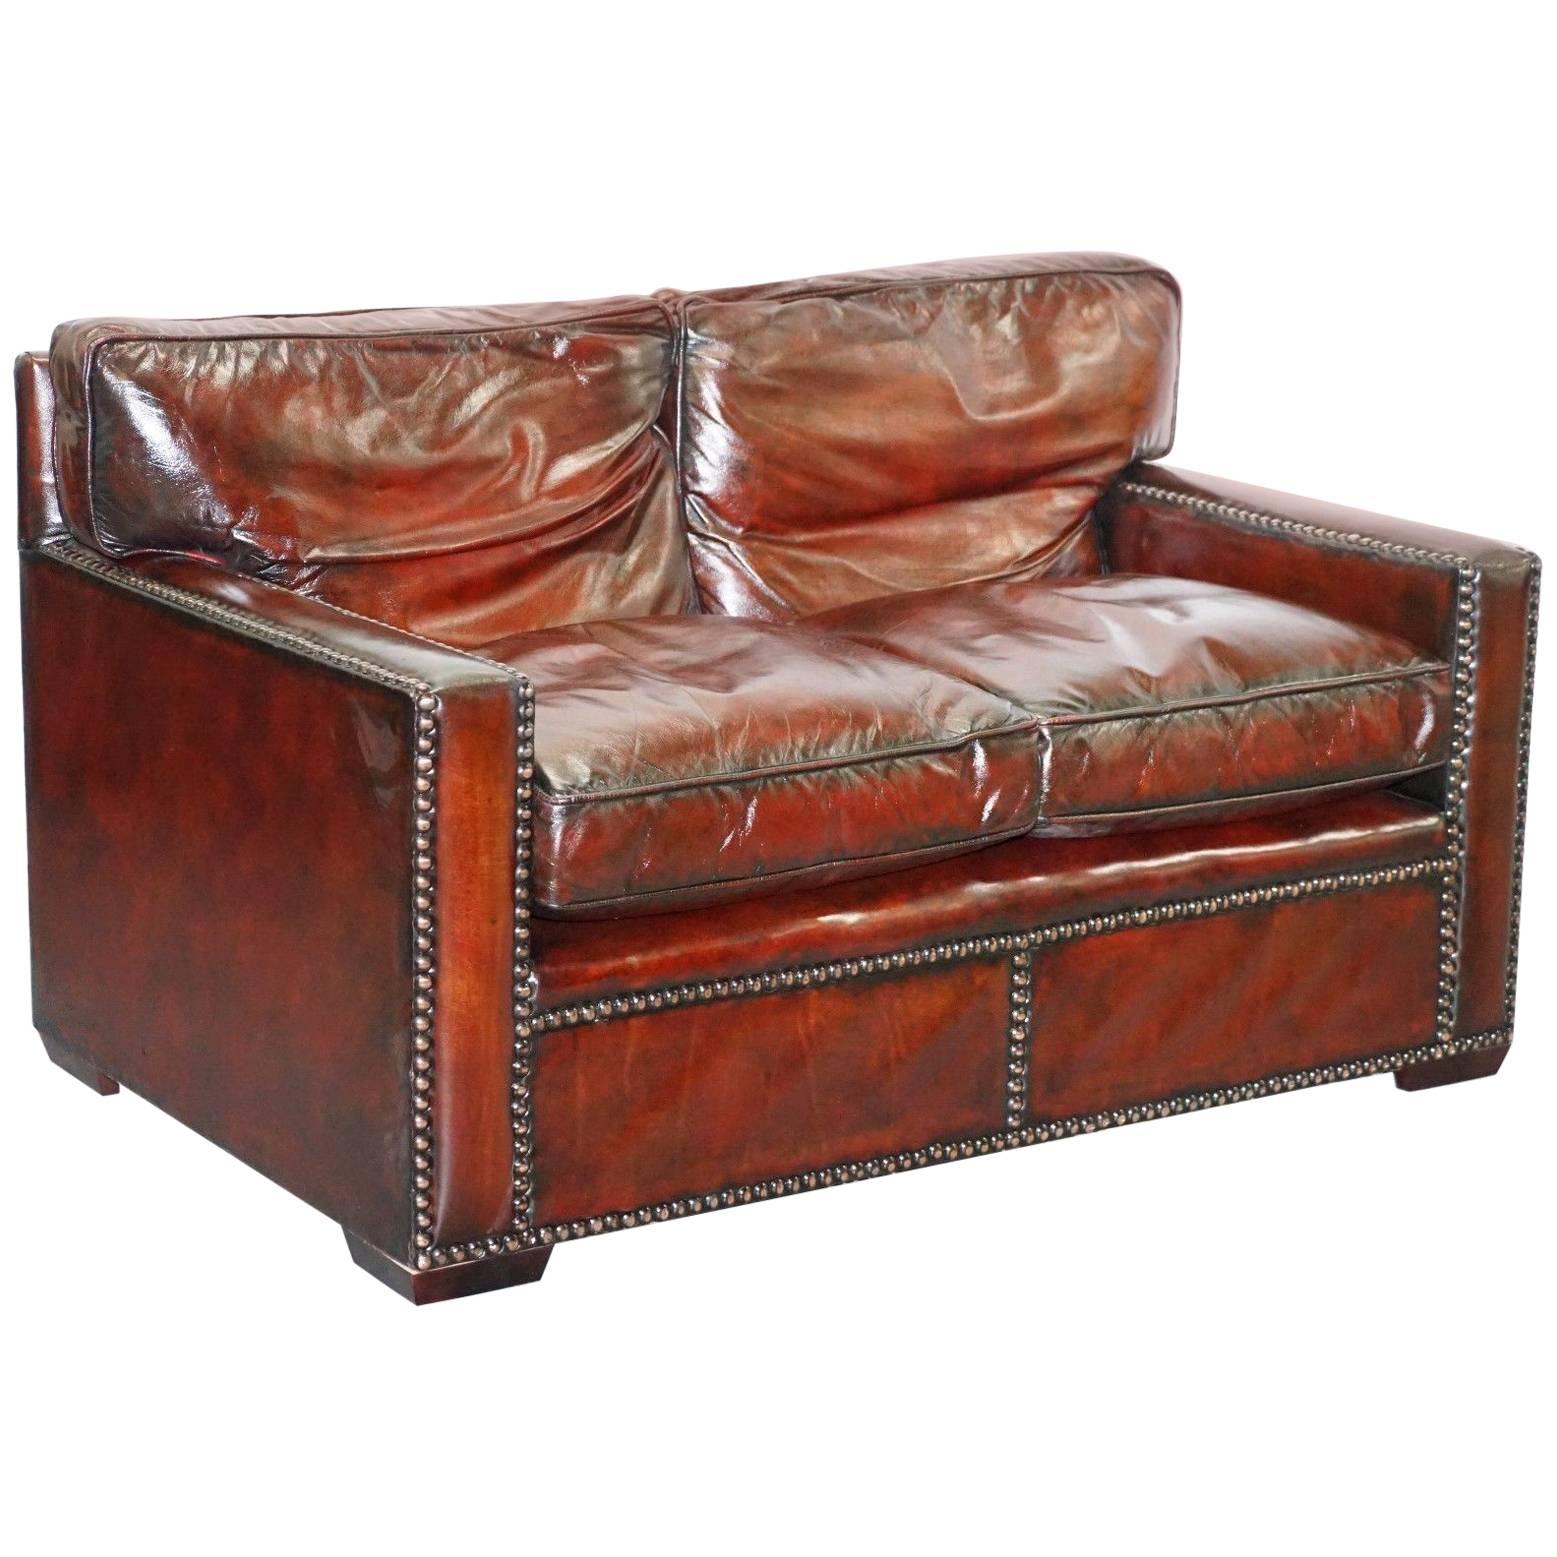 Restored Vintage Handmade in Chelsea Bordeaux Leather Sofa Part of Huge Suite